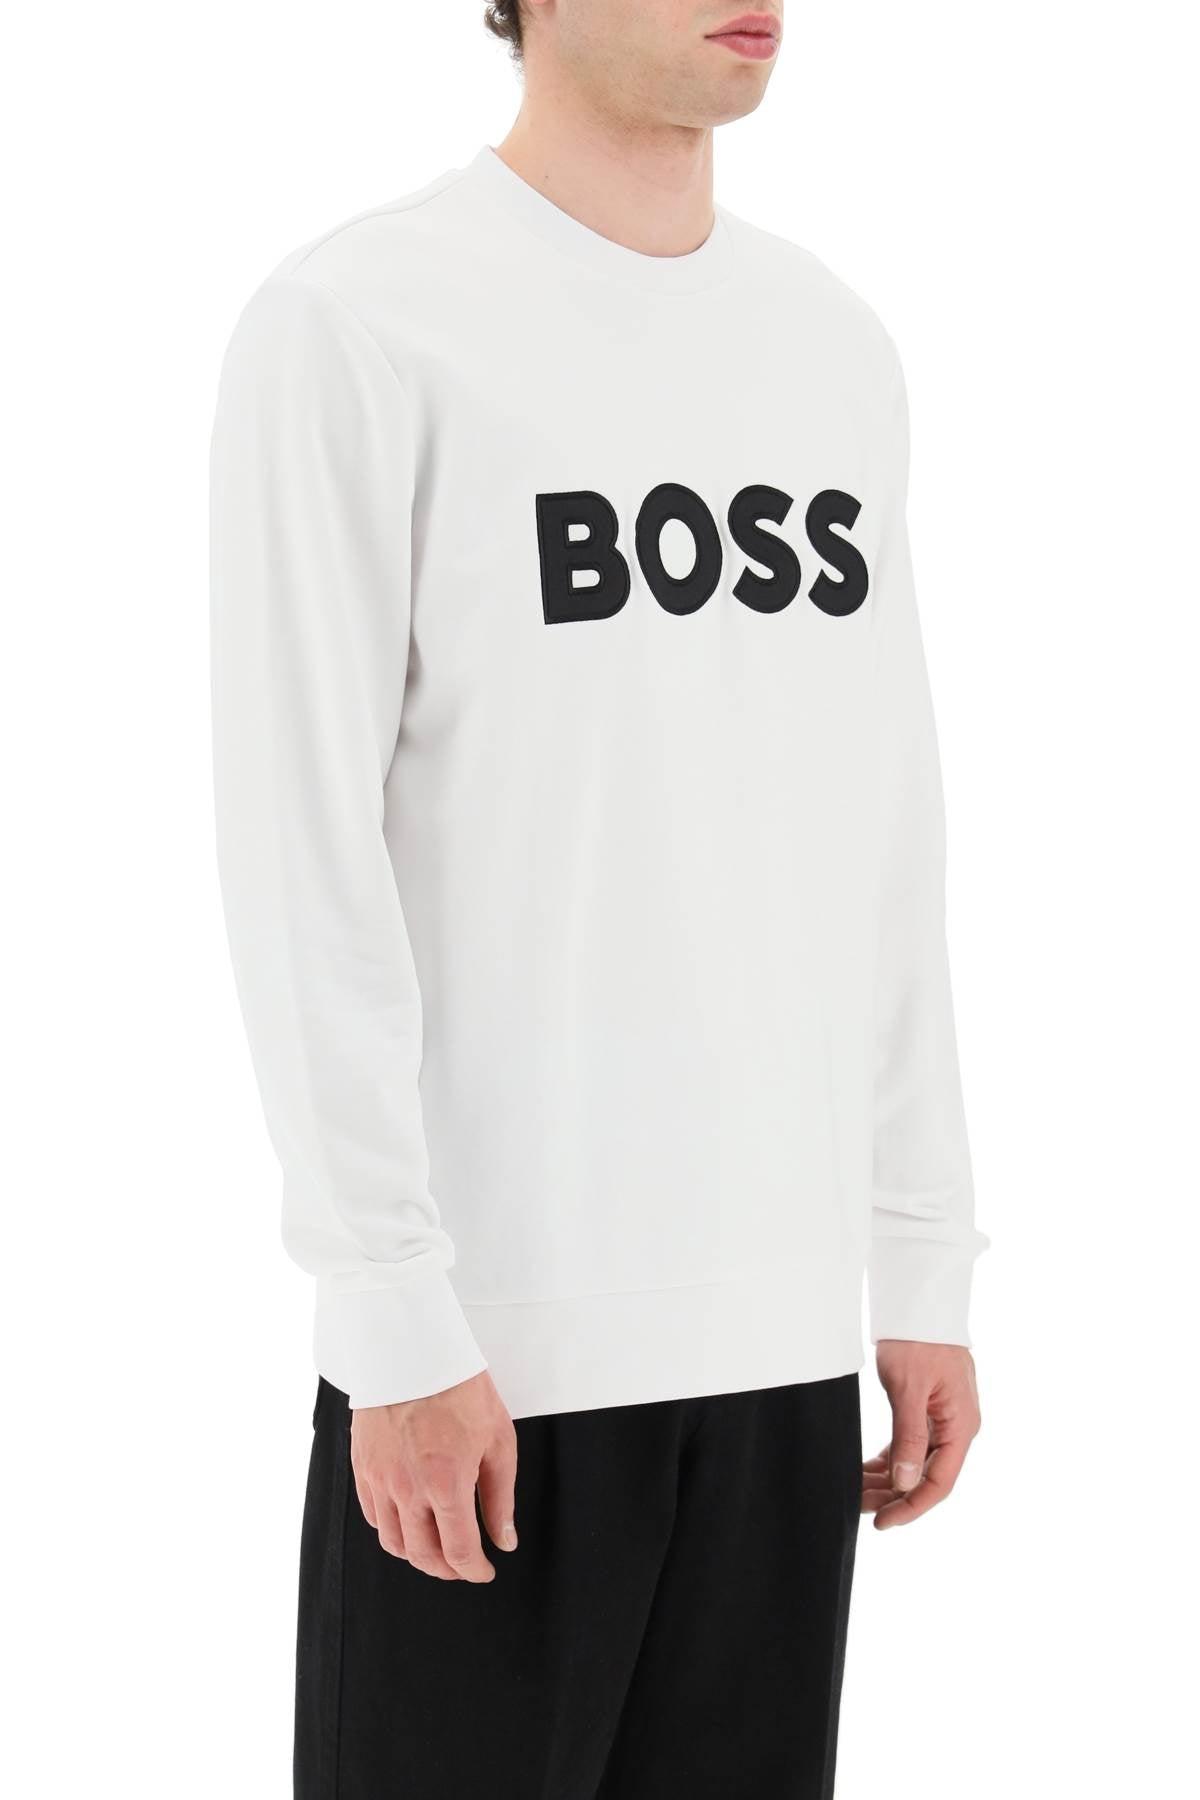 BOSS by HUGO BOSS Patch Logo Crew-neck Sweatshirt in White for Men | Lyst